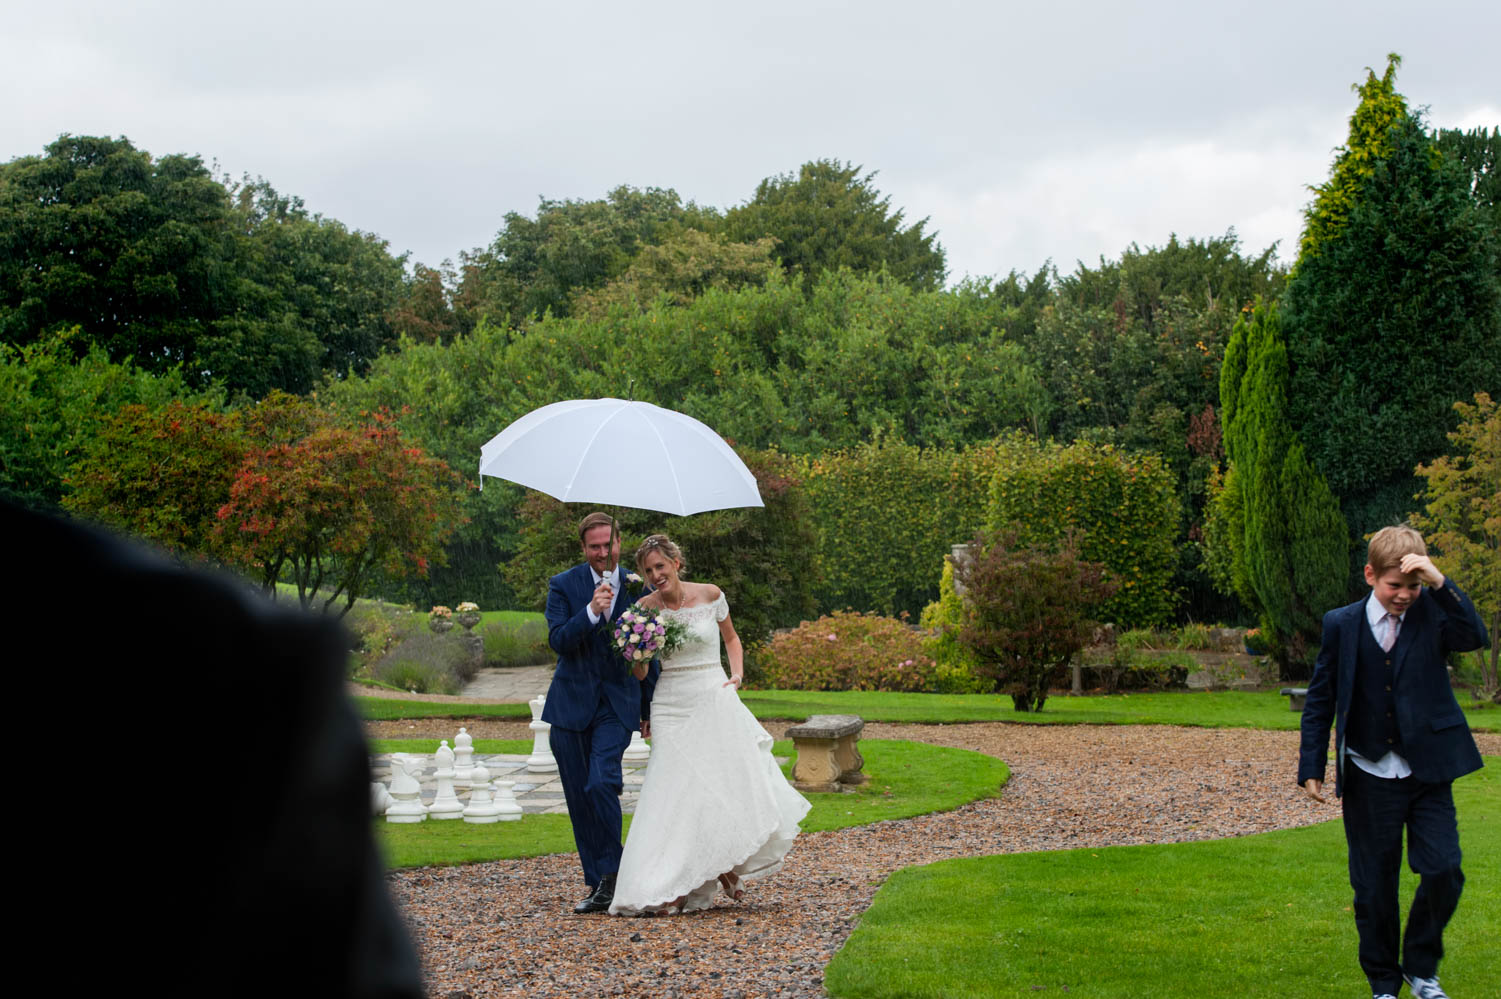 Bride and grrom with umbrella in gardens